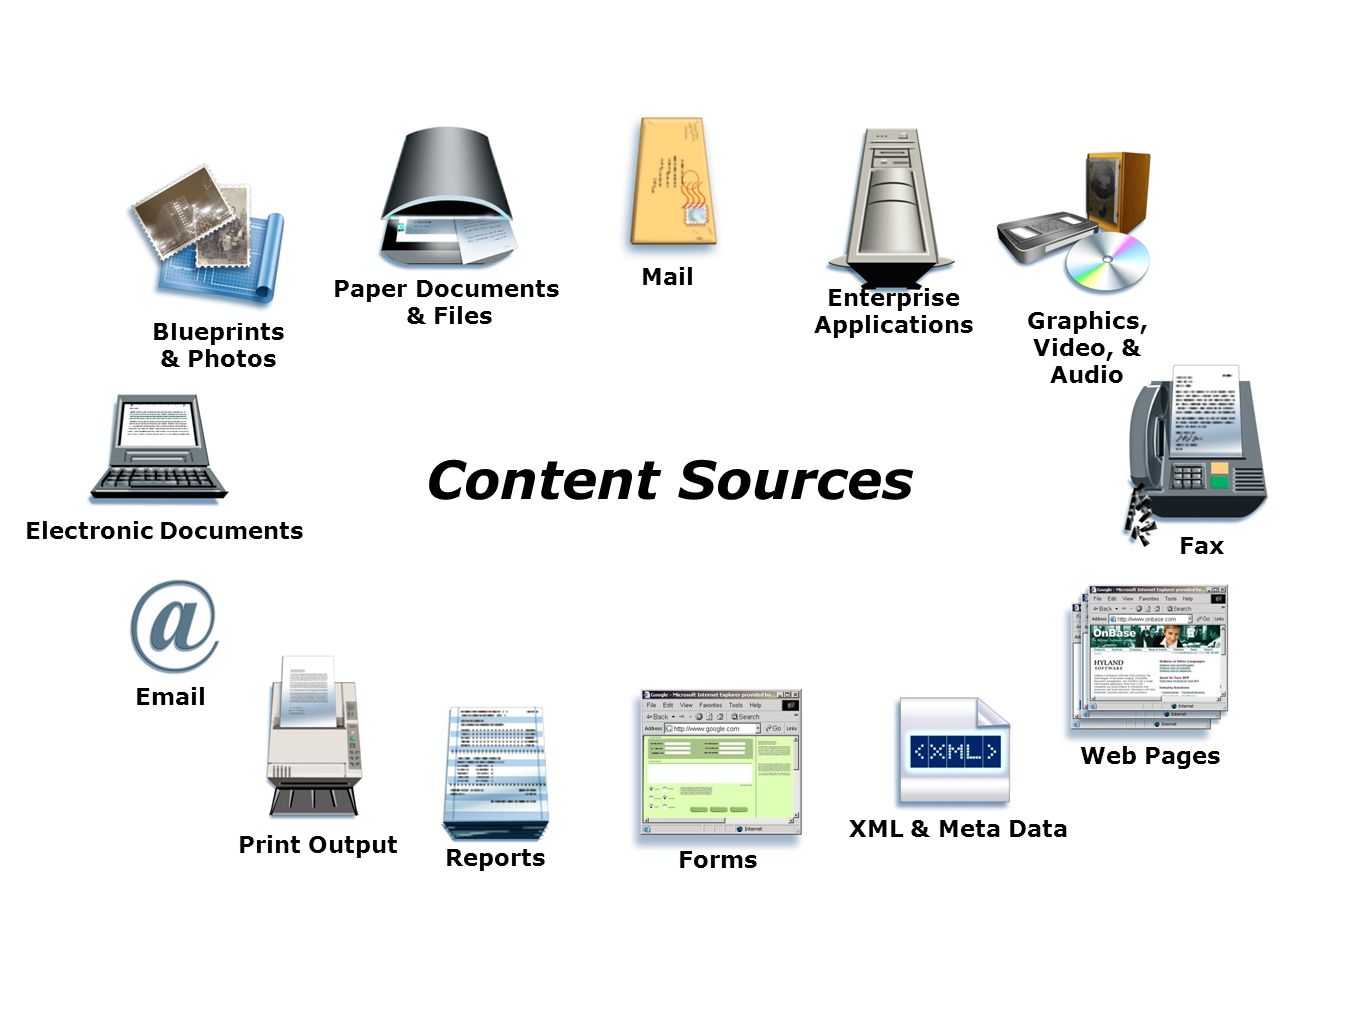 Web Pages Enterprise Applications Paper Documents & Files Fax Electronic Documents Forms Reports Mail Graphics, Video, & Audio Blueprints & Photos XML & Meta Data Print Output Content Sources